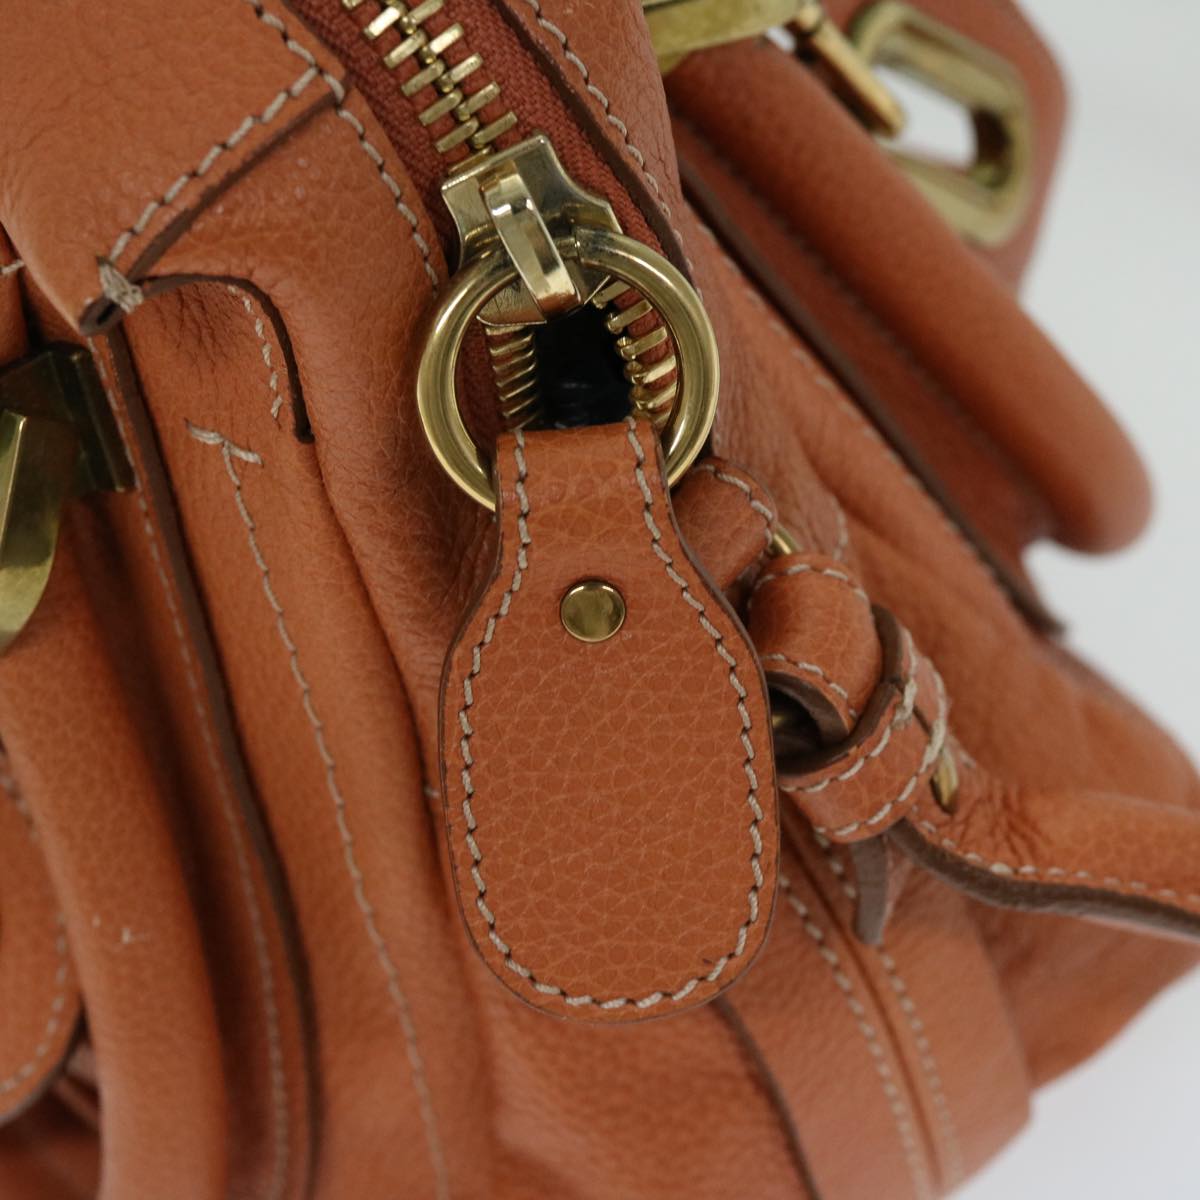 Chloe Paraty Hand Bag Leather Orange Auth am5796